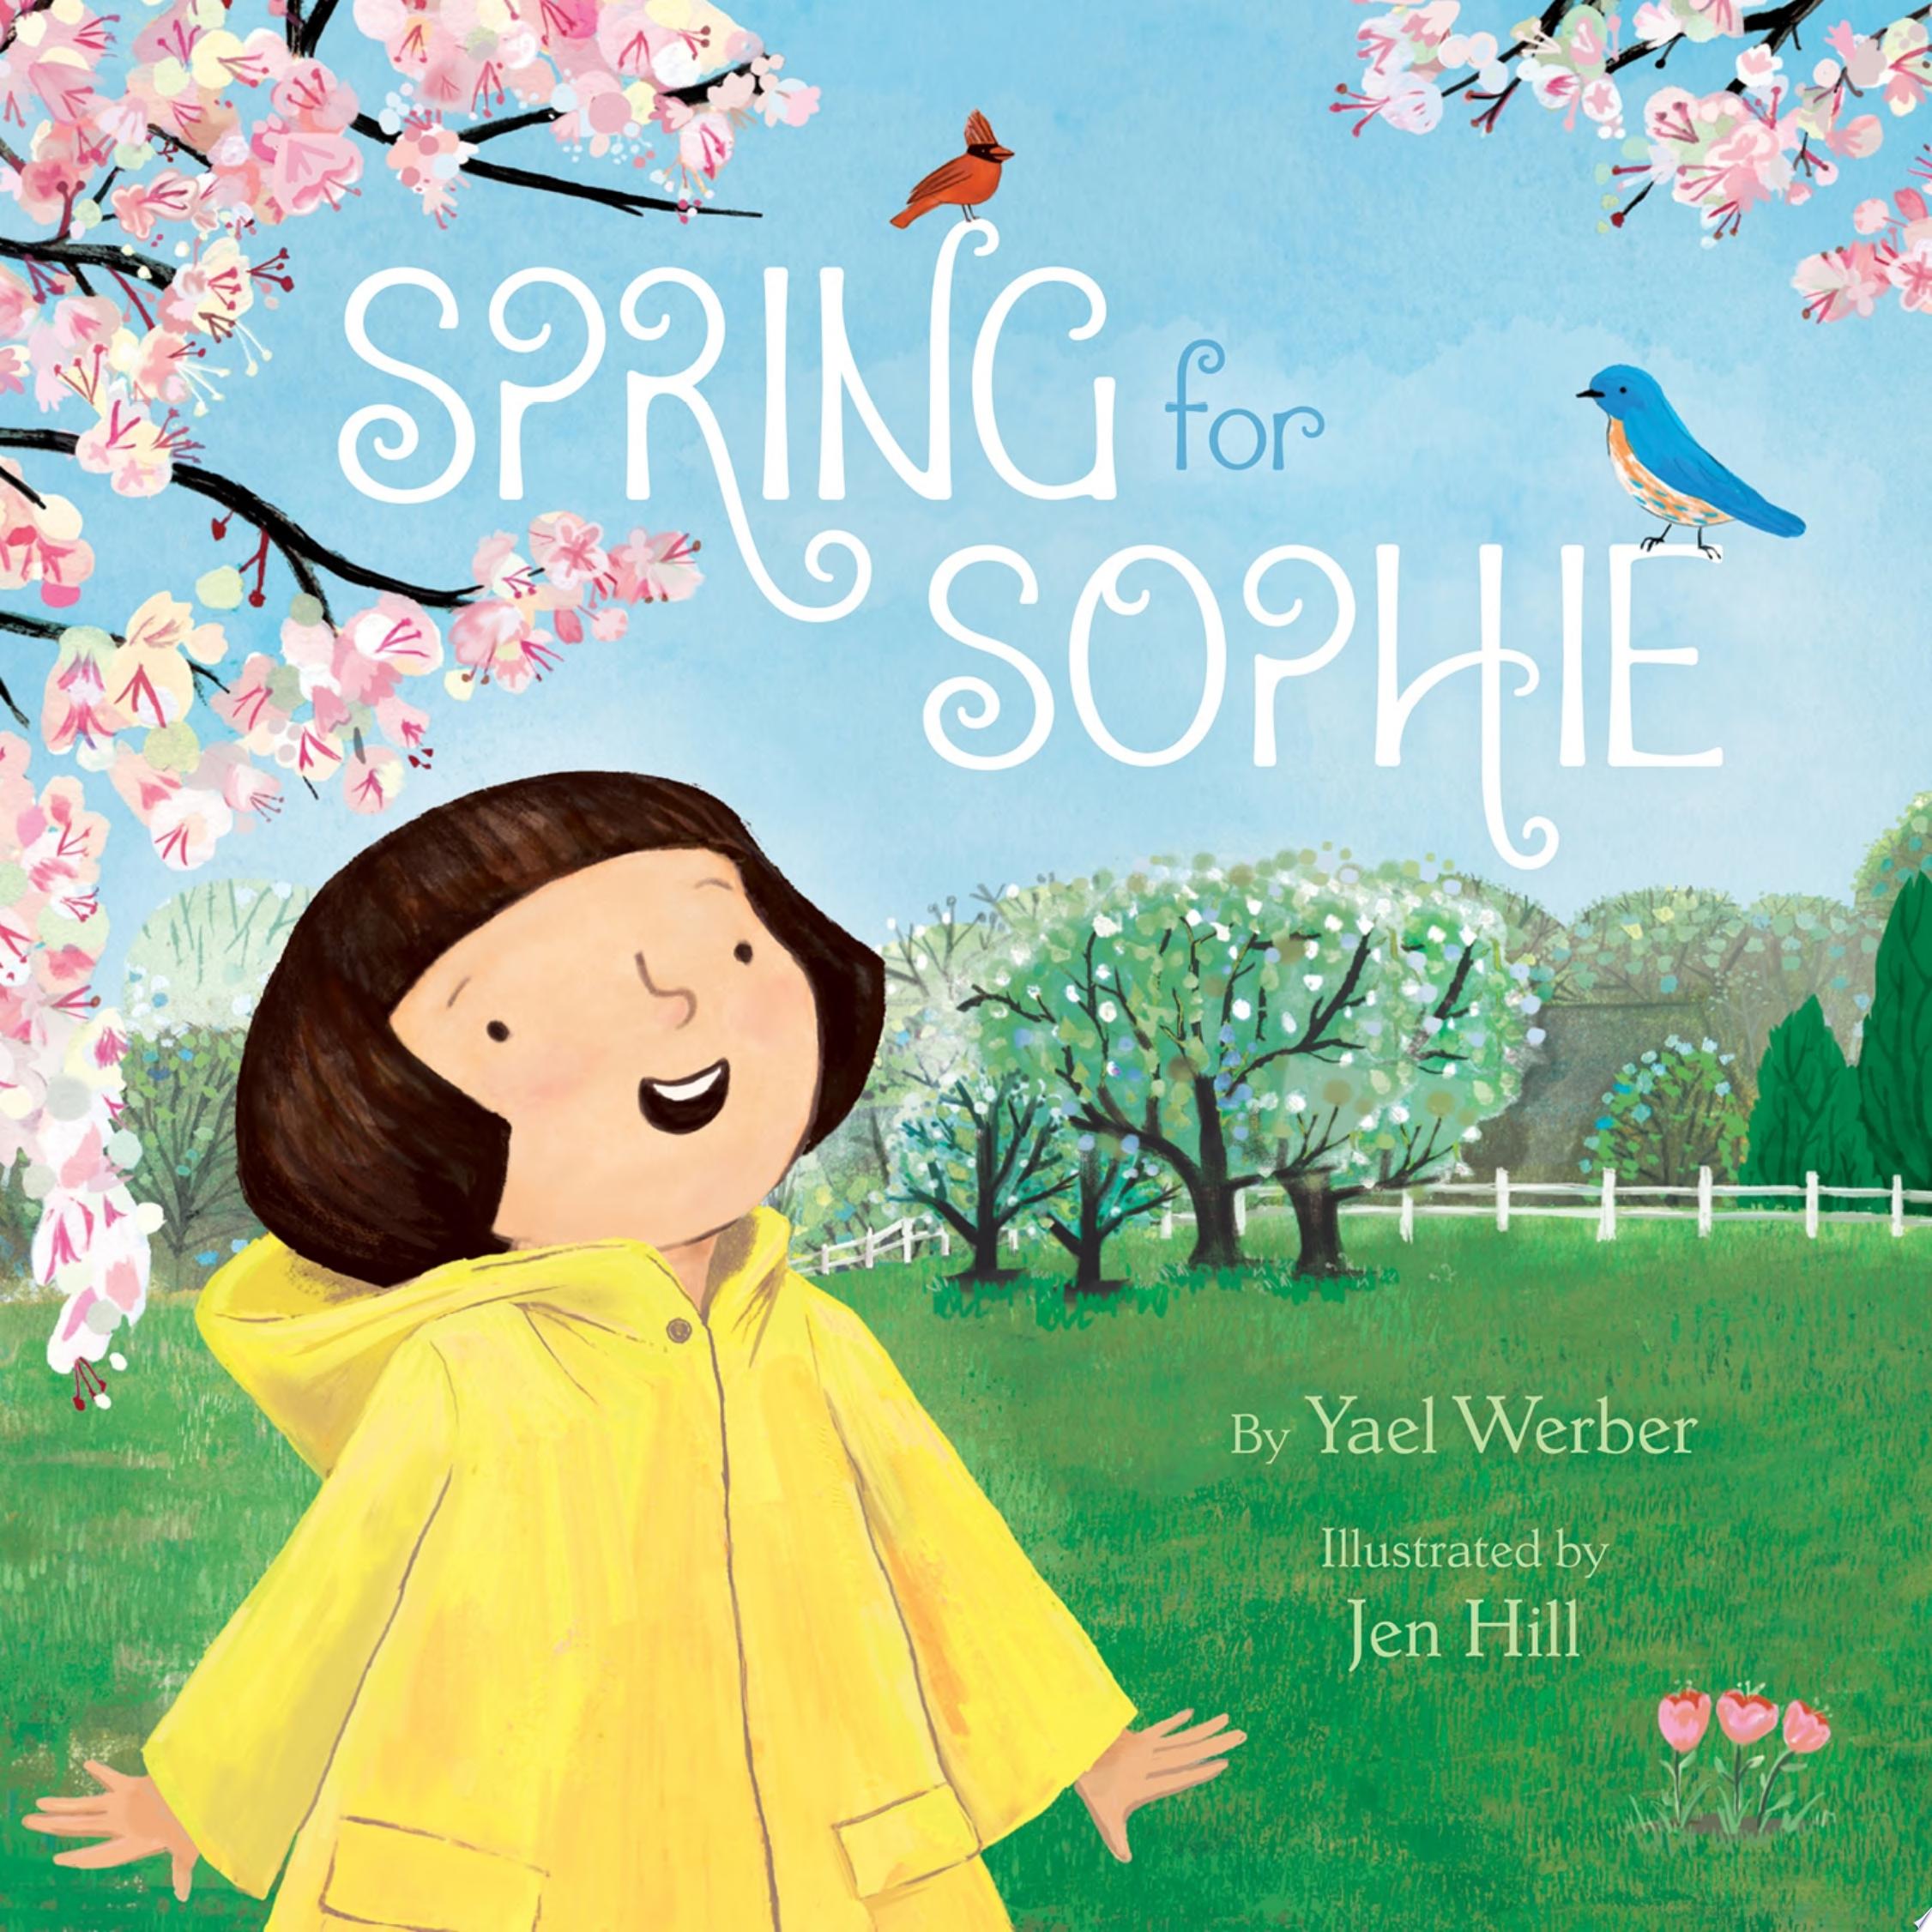 Image for "Spring for Sophie"